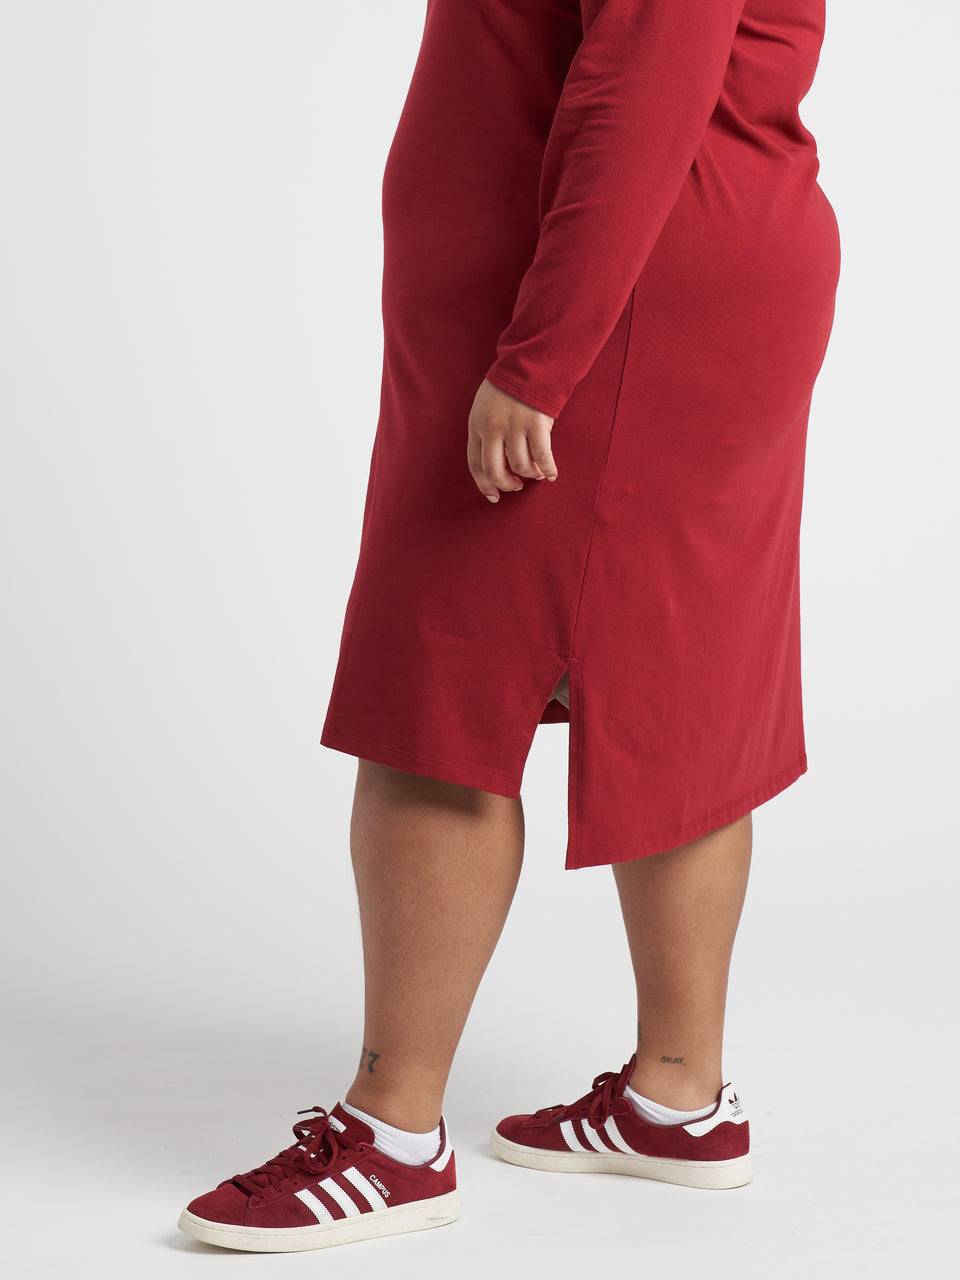 Long Sleeve Tesino Washed Jersey Dress - Red Dahlia Zoom image 9